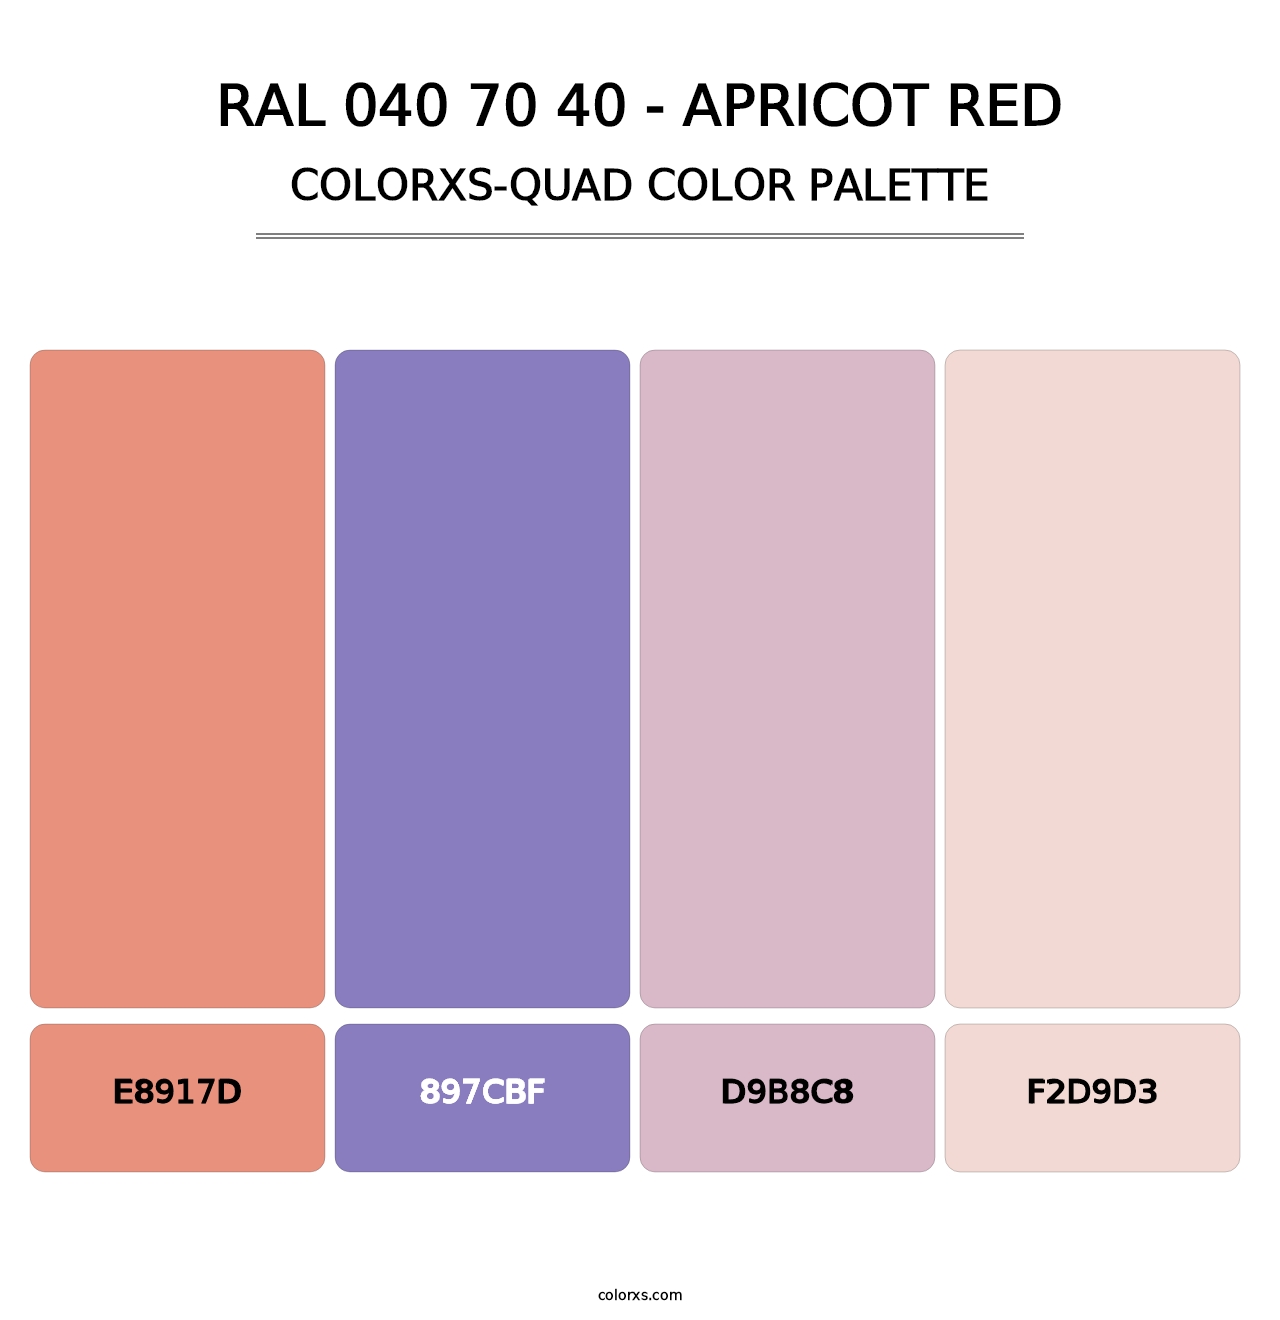 RAL 040 70 40 - Apricot Red - Colorxs Quad Palette